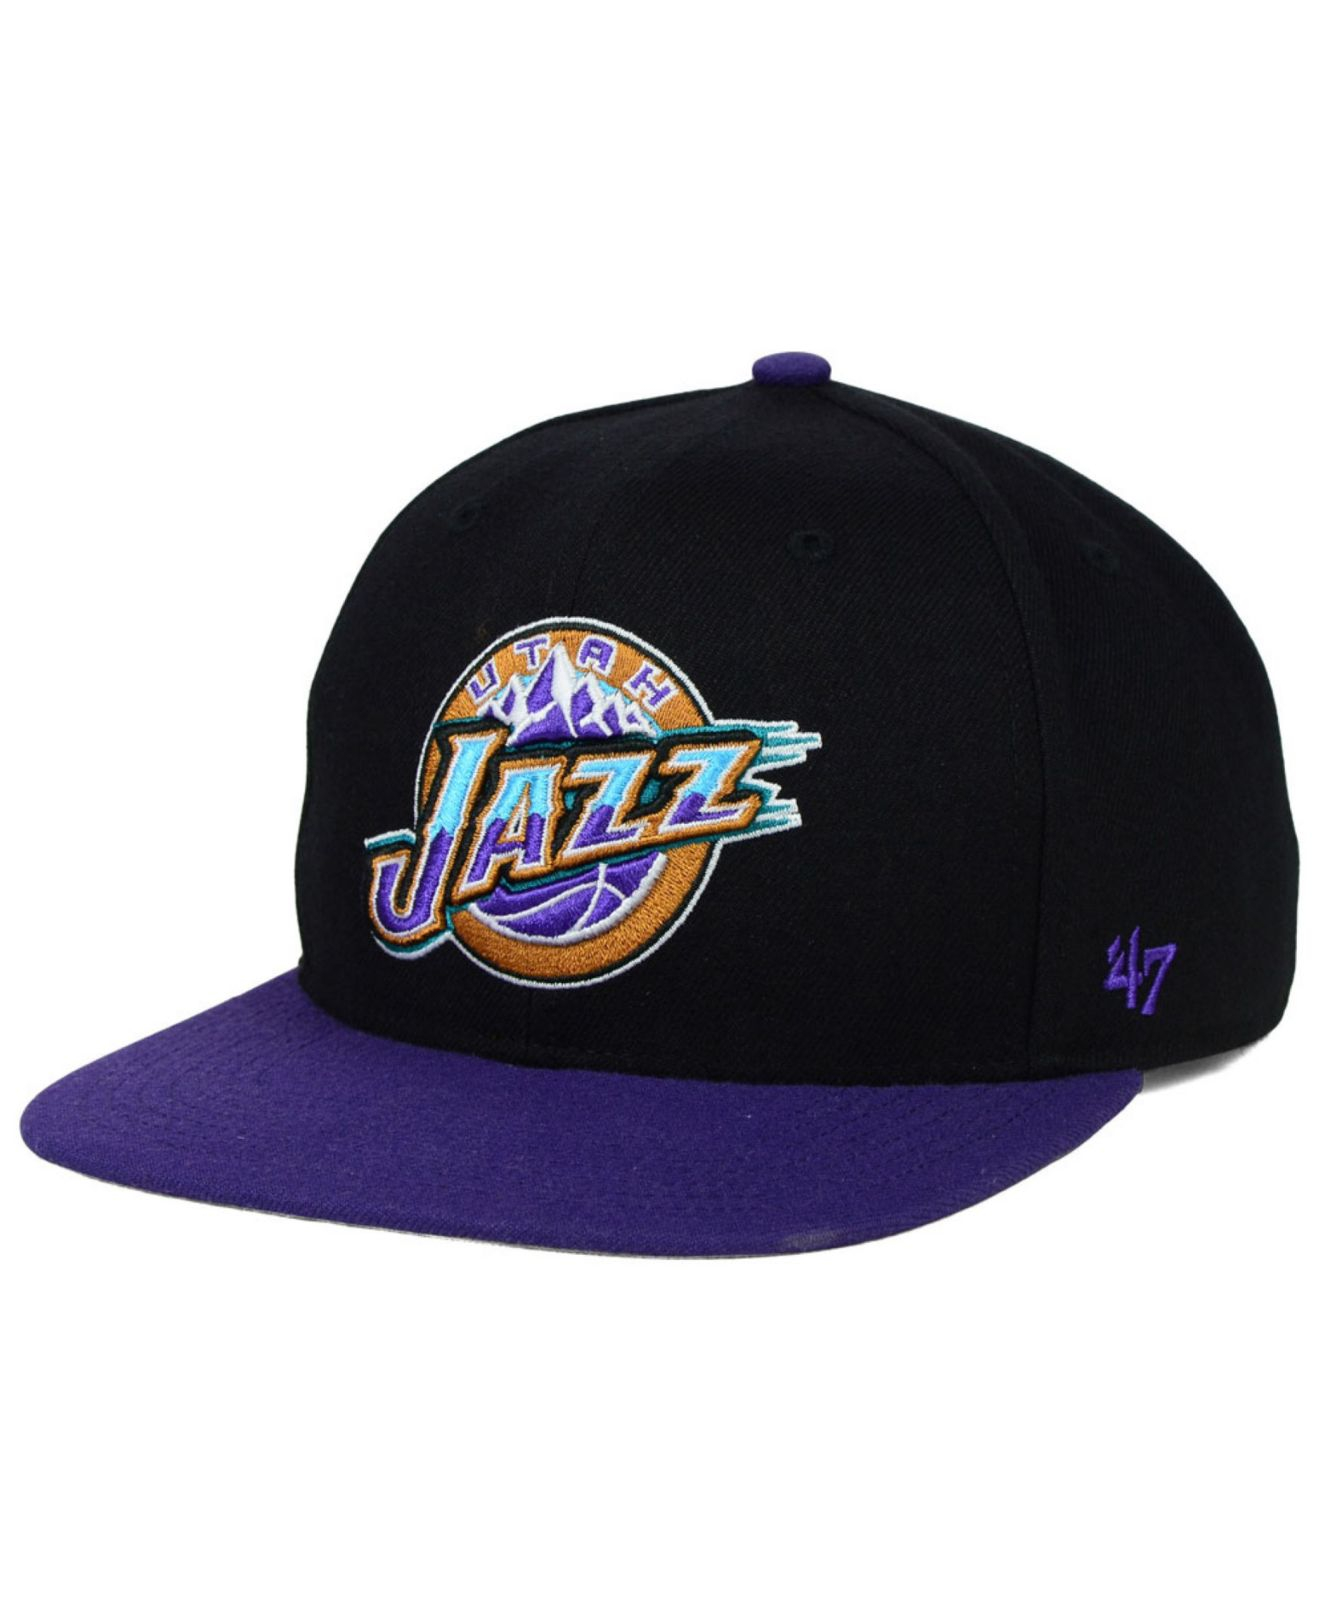 Utah Jazz Cap - This is a new era9forty nba utah jazz adjustable ...